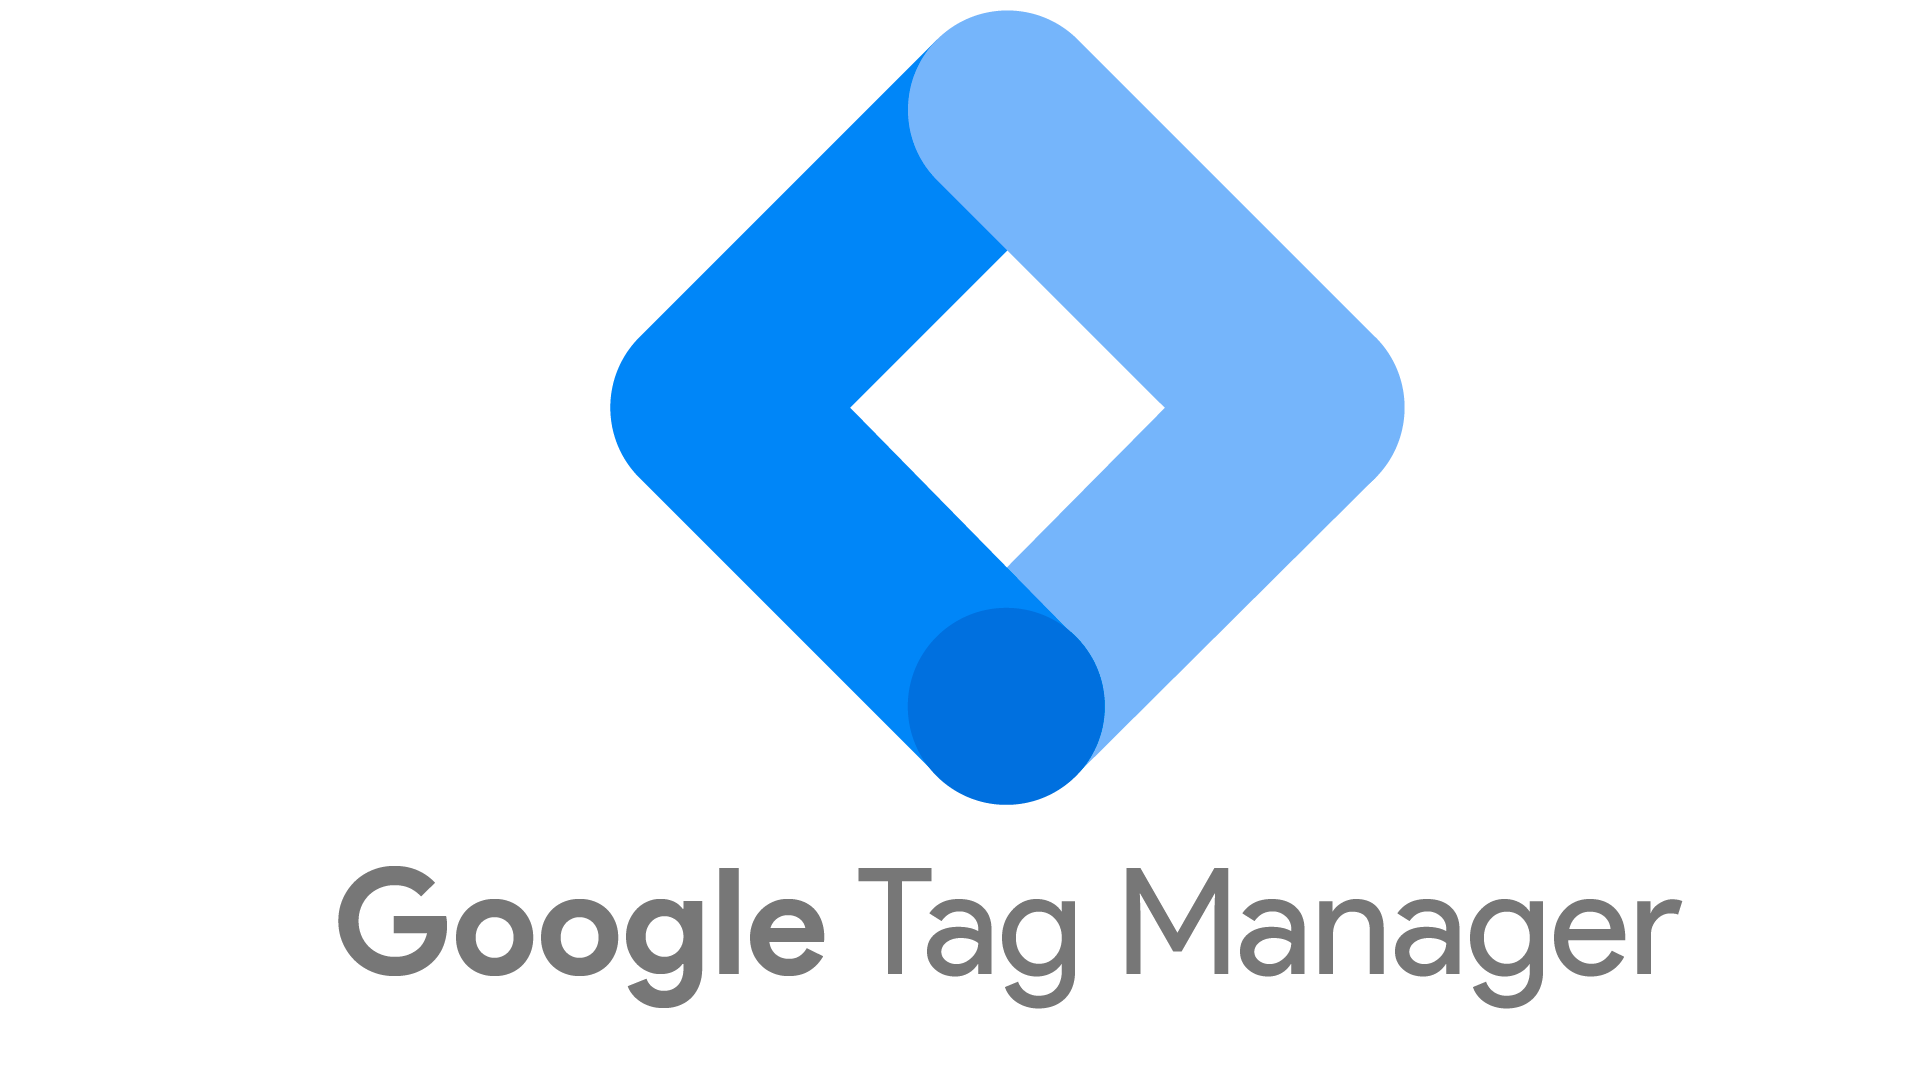 logo-google-tag-manager